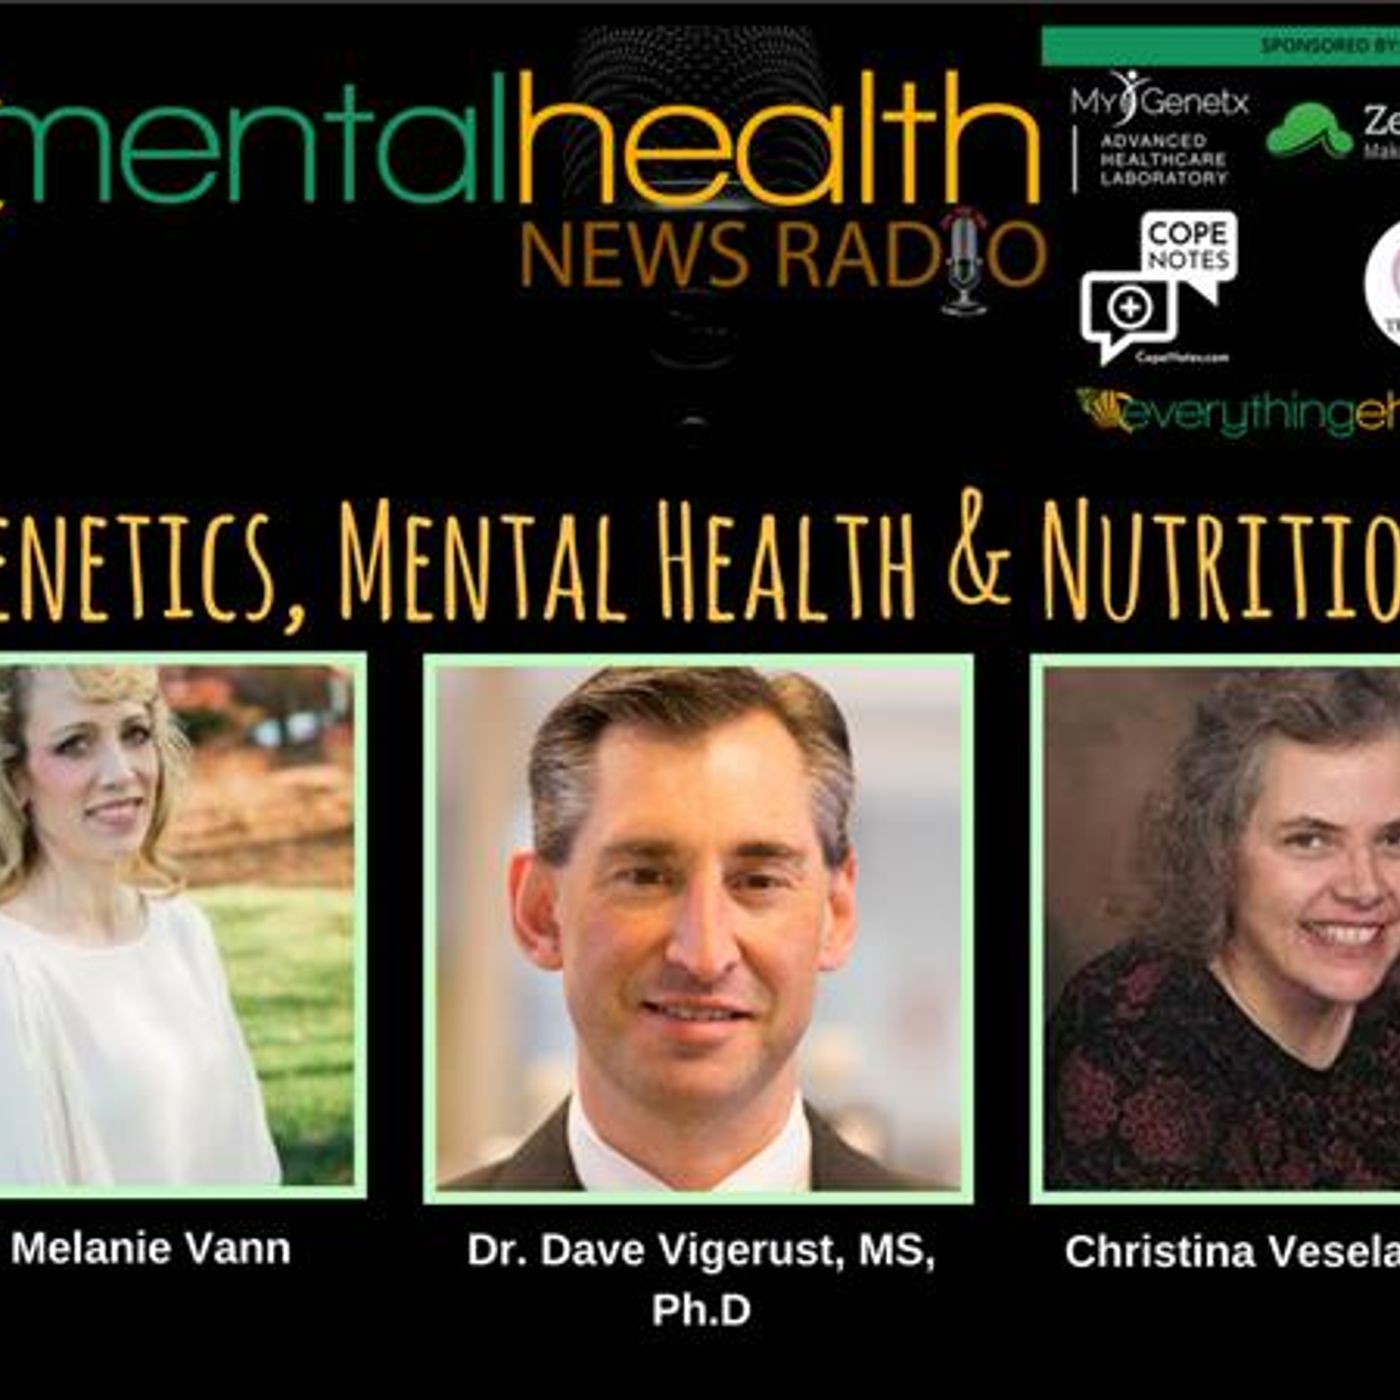 Mental Health News Radio - Genetics, Mental Health &amp; Nutrition with Christina Veselak and Dr. Dave Vigerust